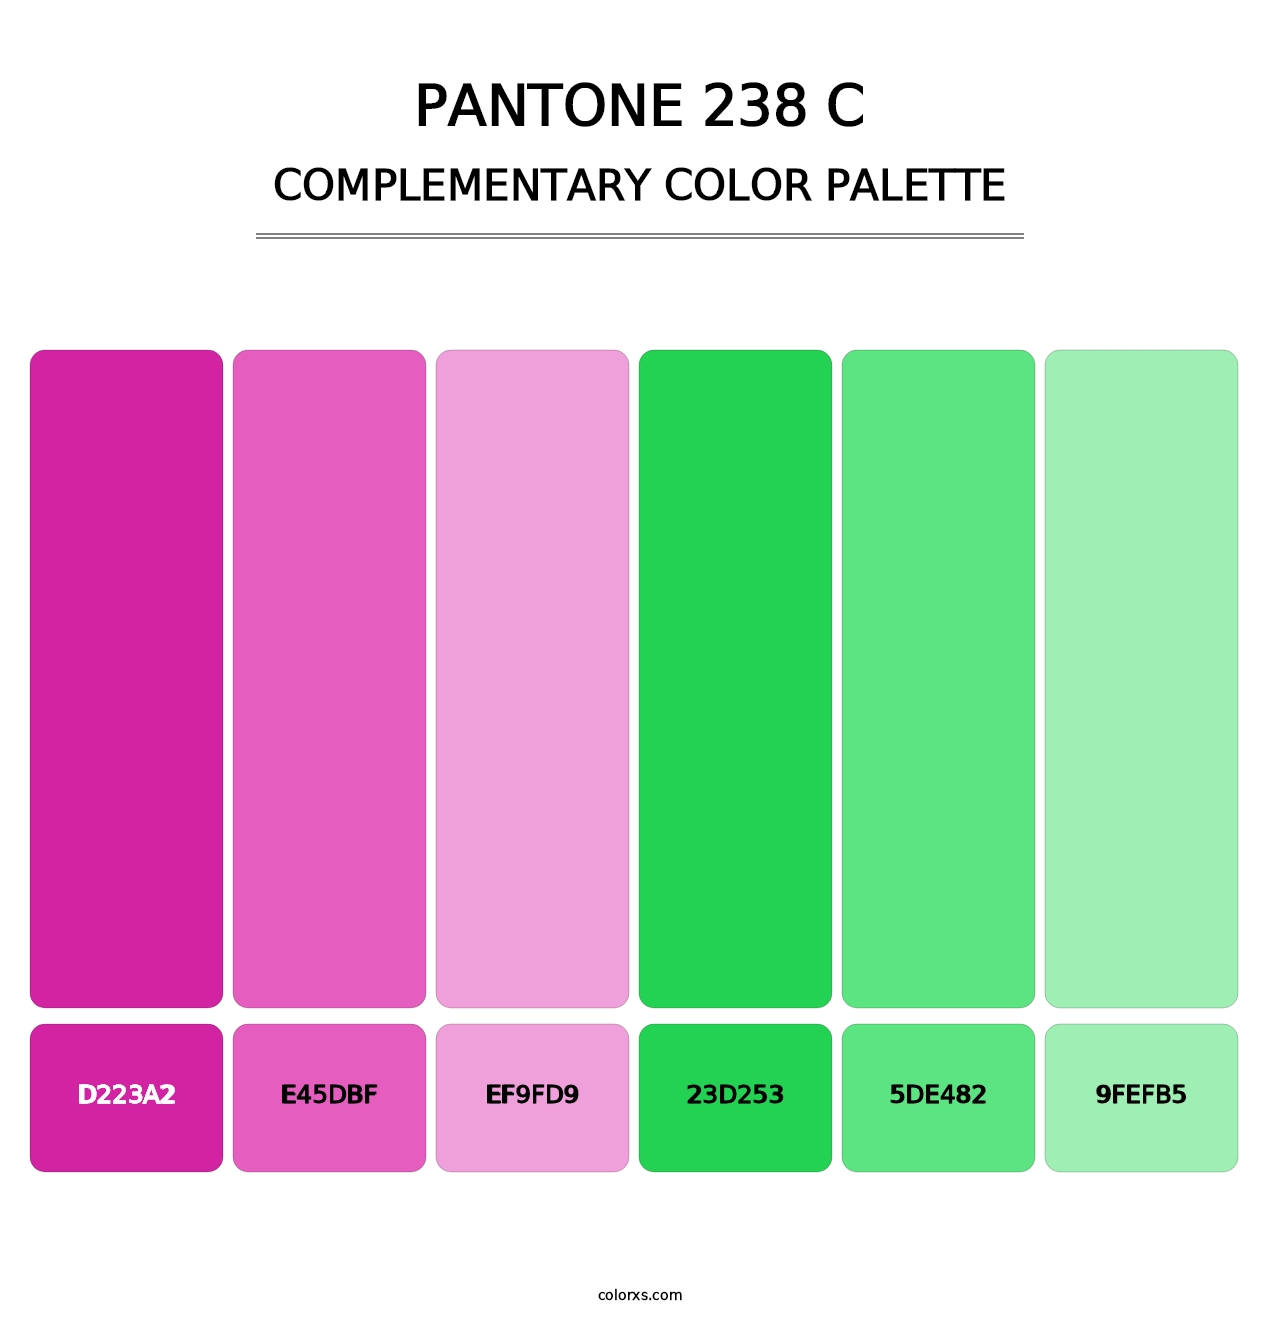 PANTONE 238 C - Complementary Color Palette